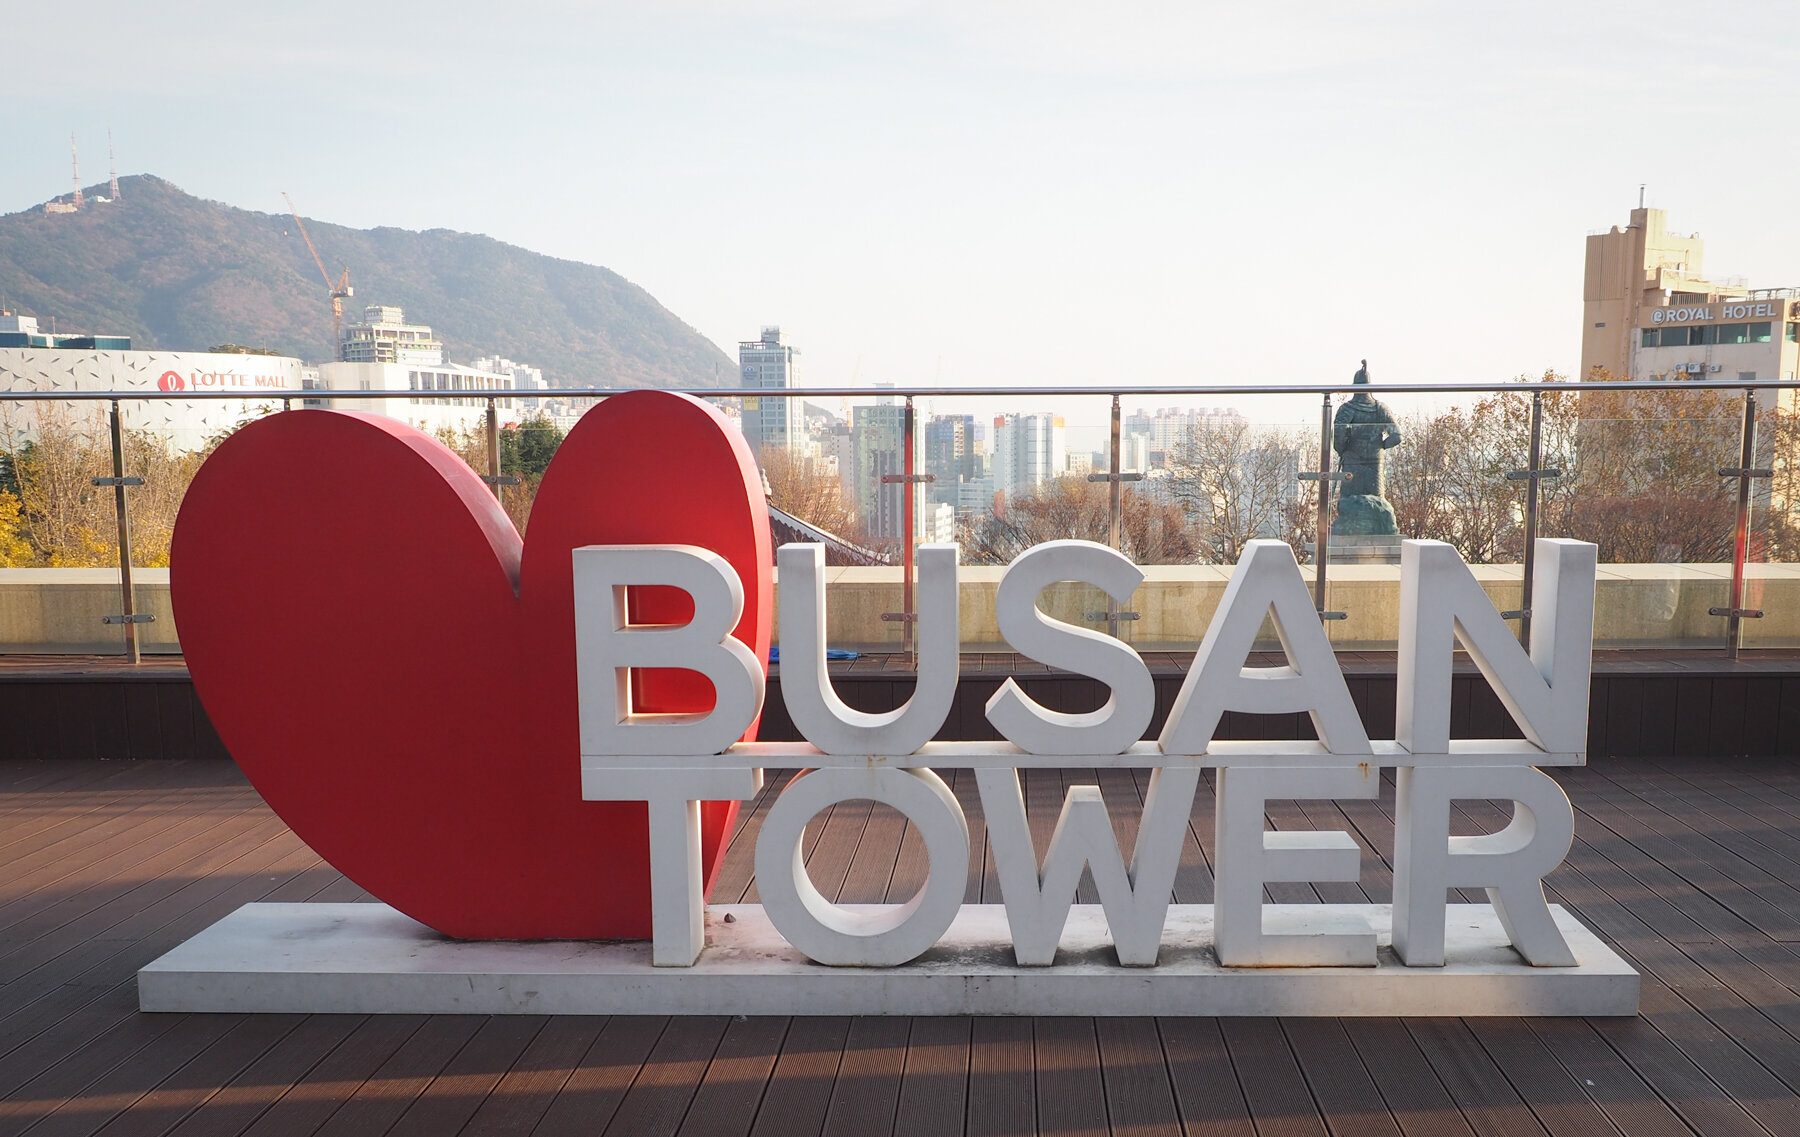 &lt;3 Busan Tower